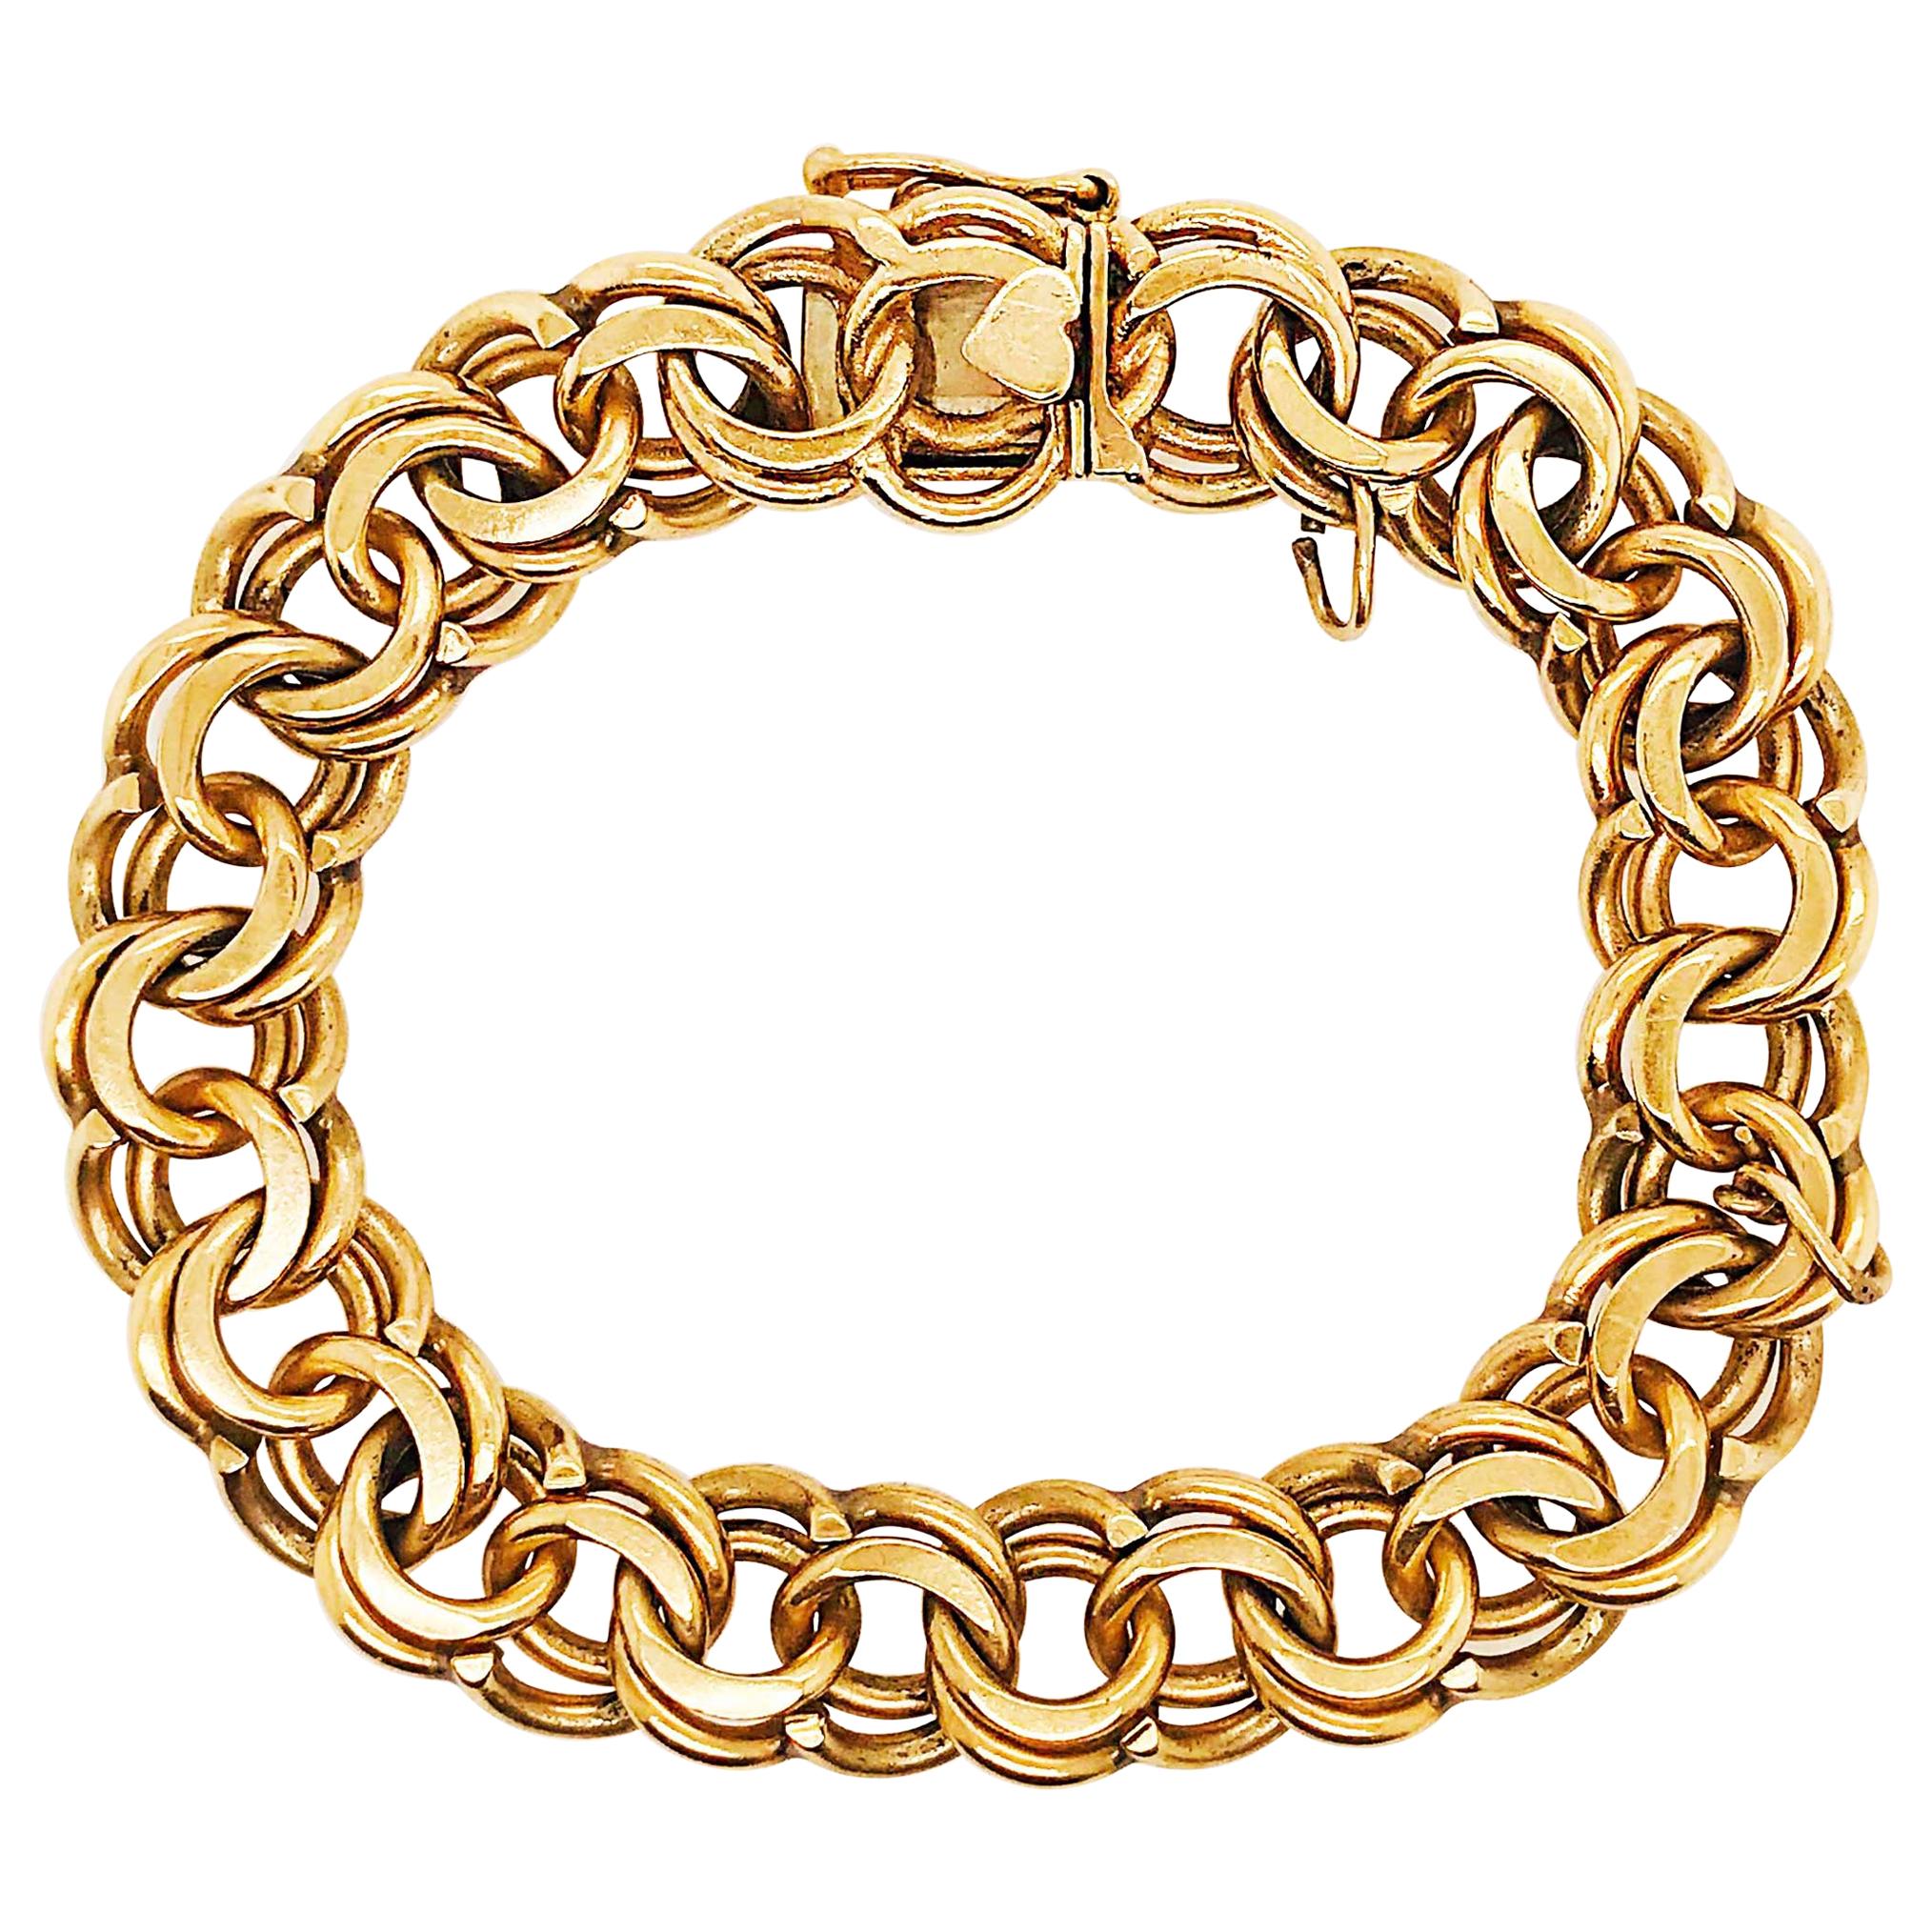 Heavy Gold Charm Bracelet, 14 Karat Large Gold Chain Bracelet